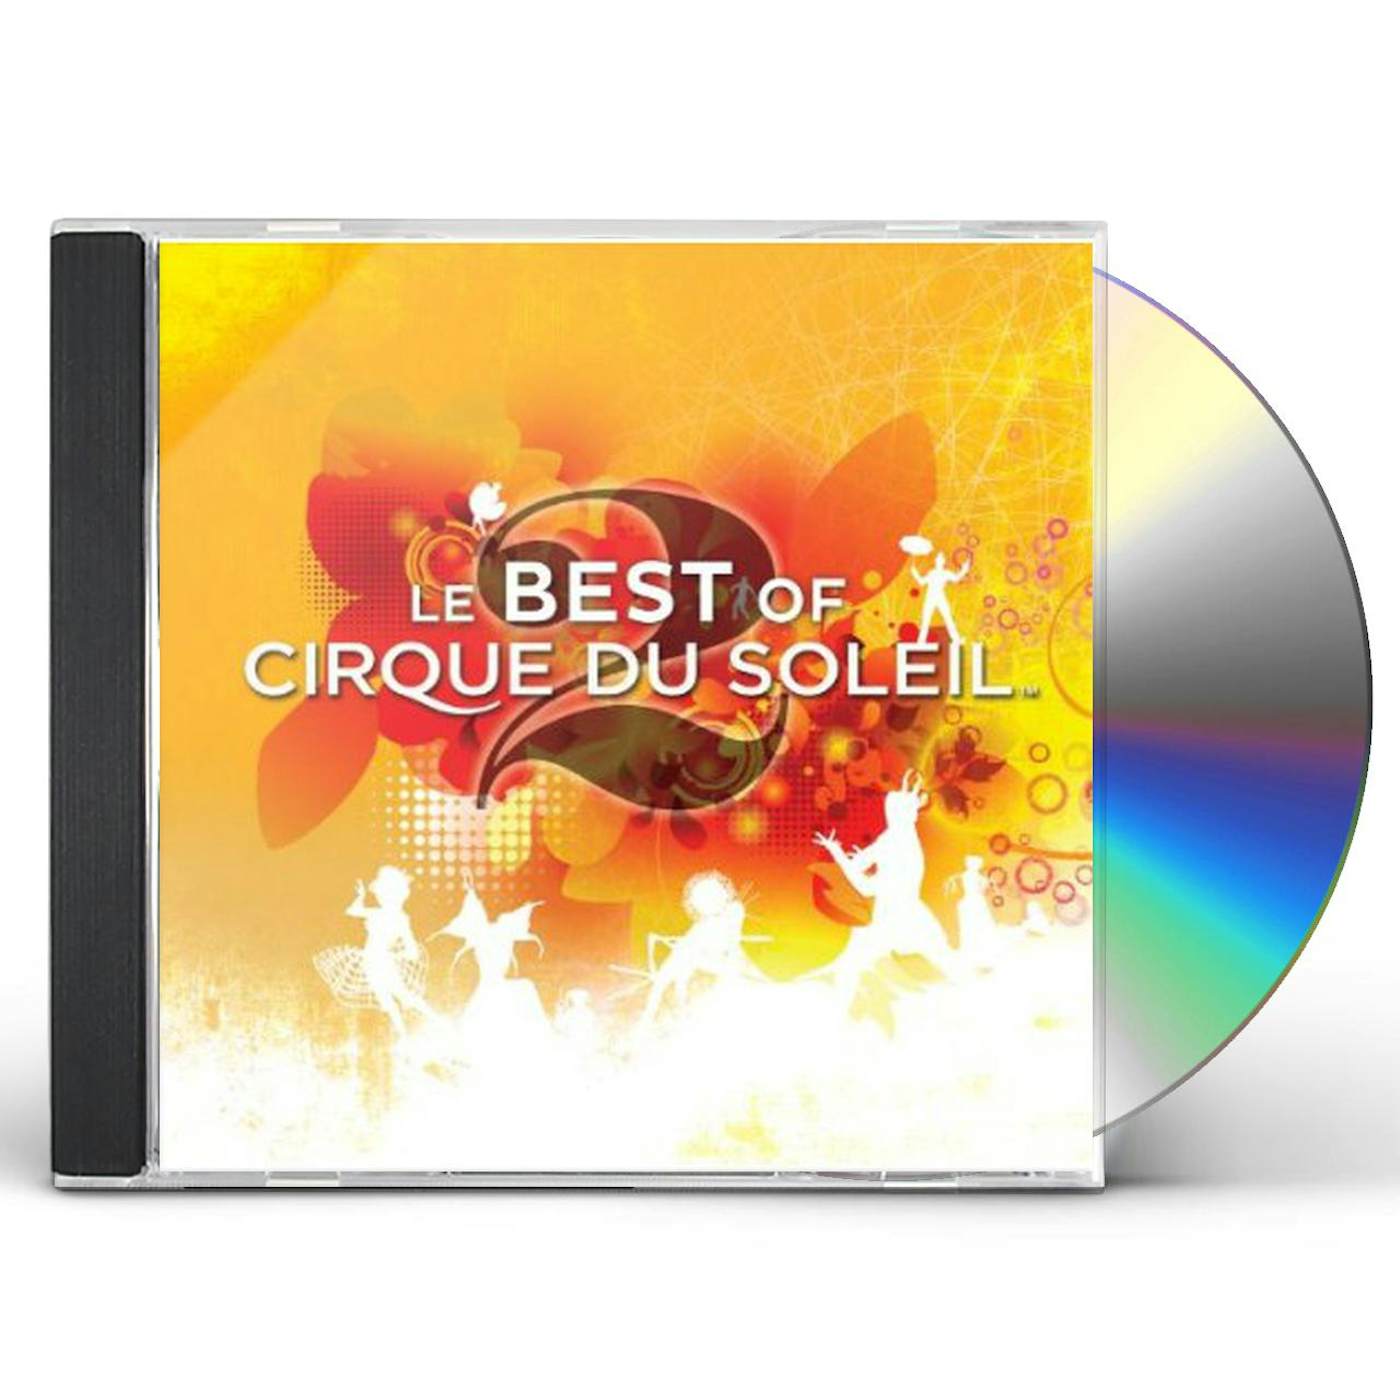 Cirque du Soleil BEST OF 2 CD